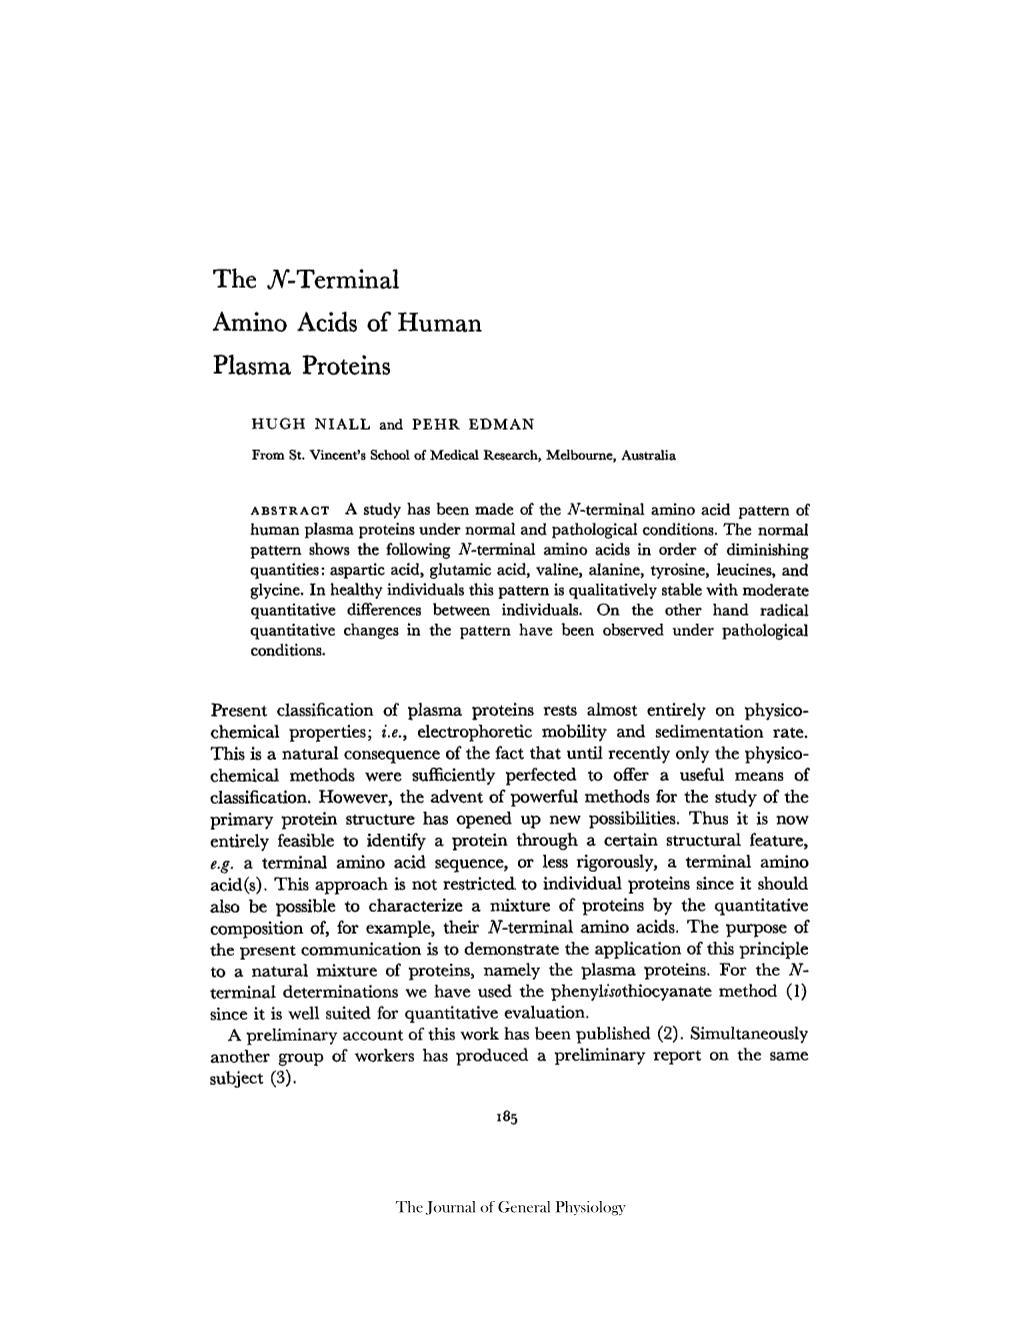 The N-Terminal Amino Acids of Human Plasma Proteins